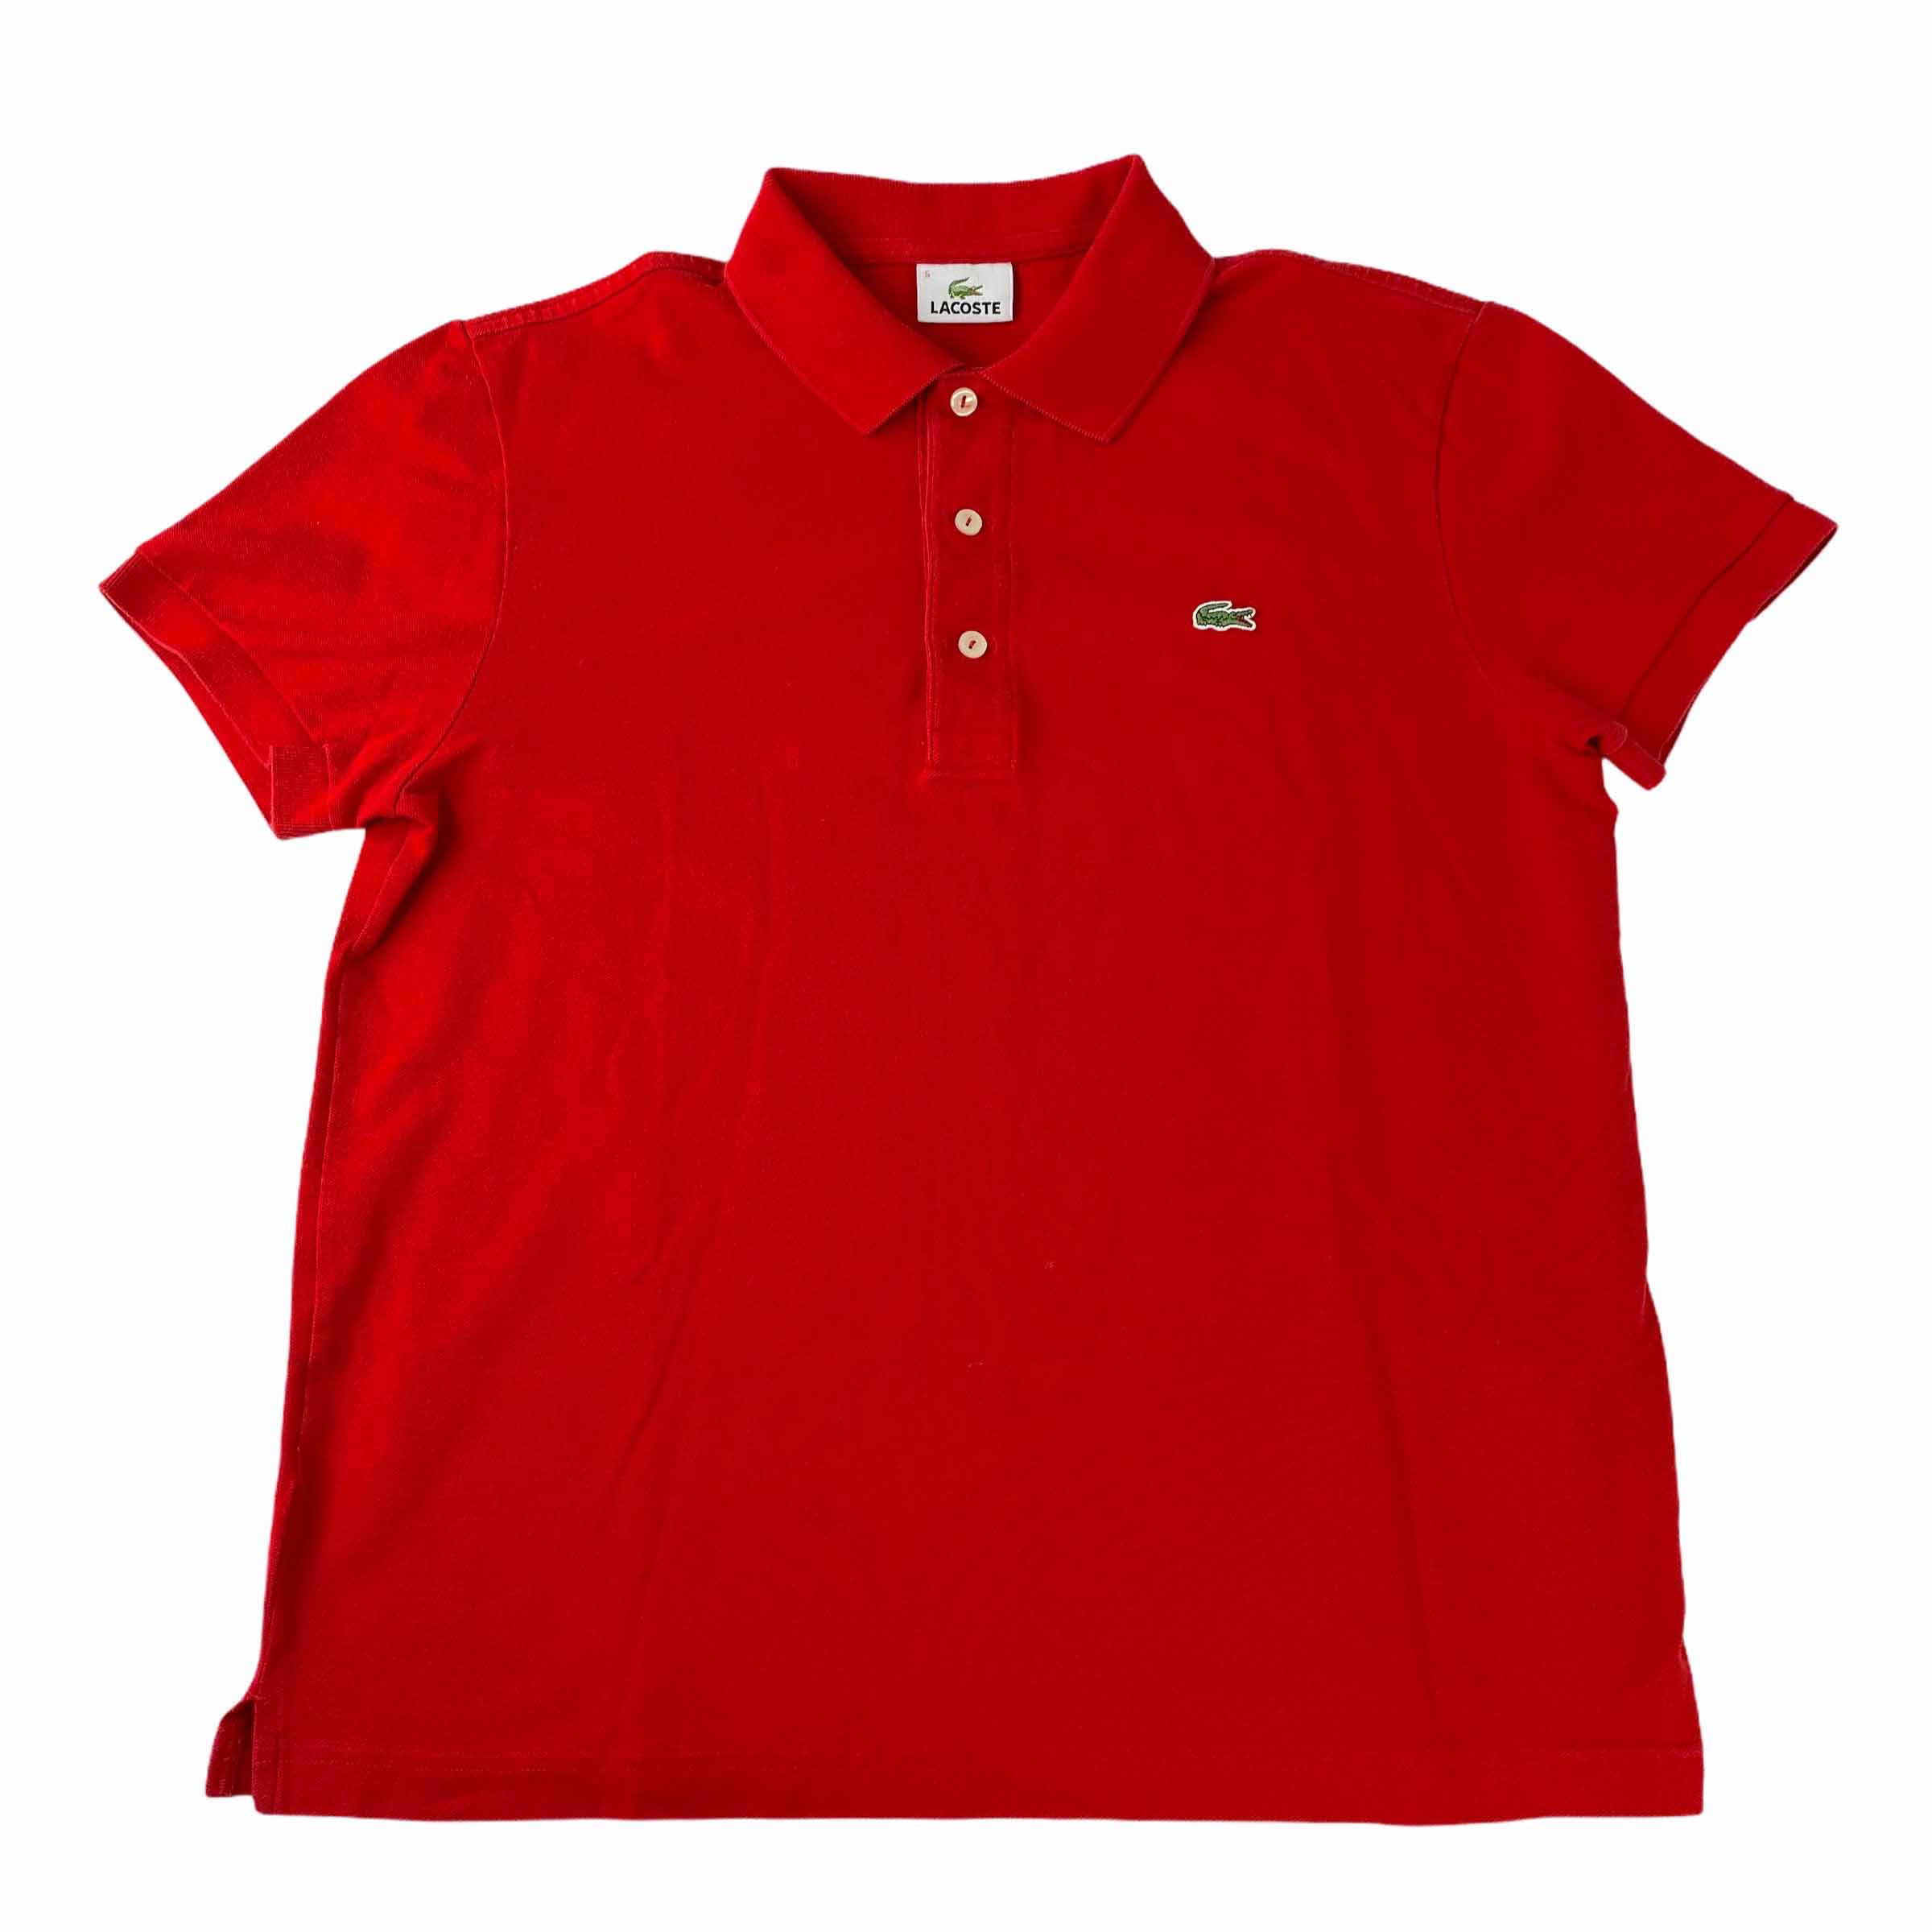 [Lacoste] Basic Red PK Tshirt - Size 5